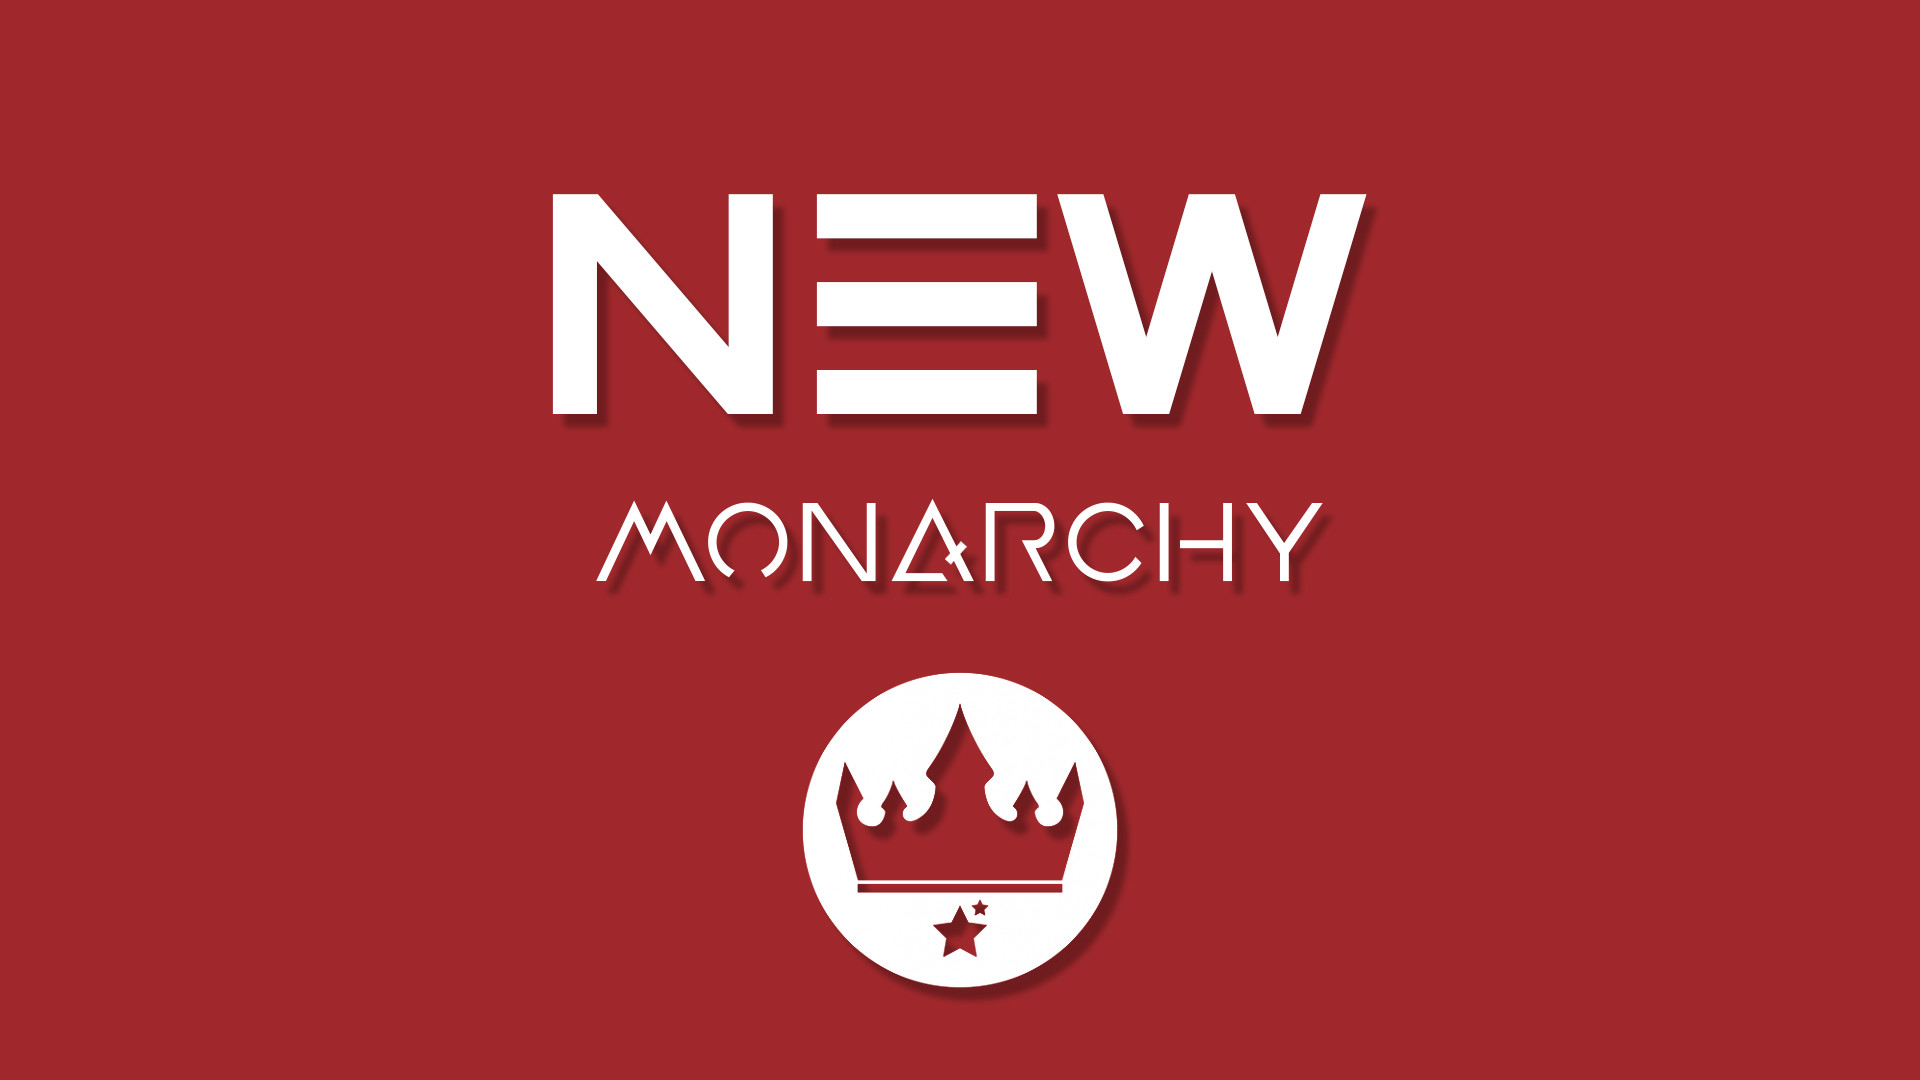 1920x1080 New Monarchy Wallpaper by NAPALMSTR1KE New Monarchy Wallpaper by  NAPALMSTR1KE